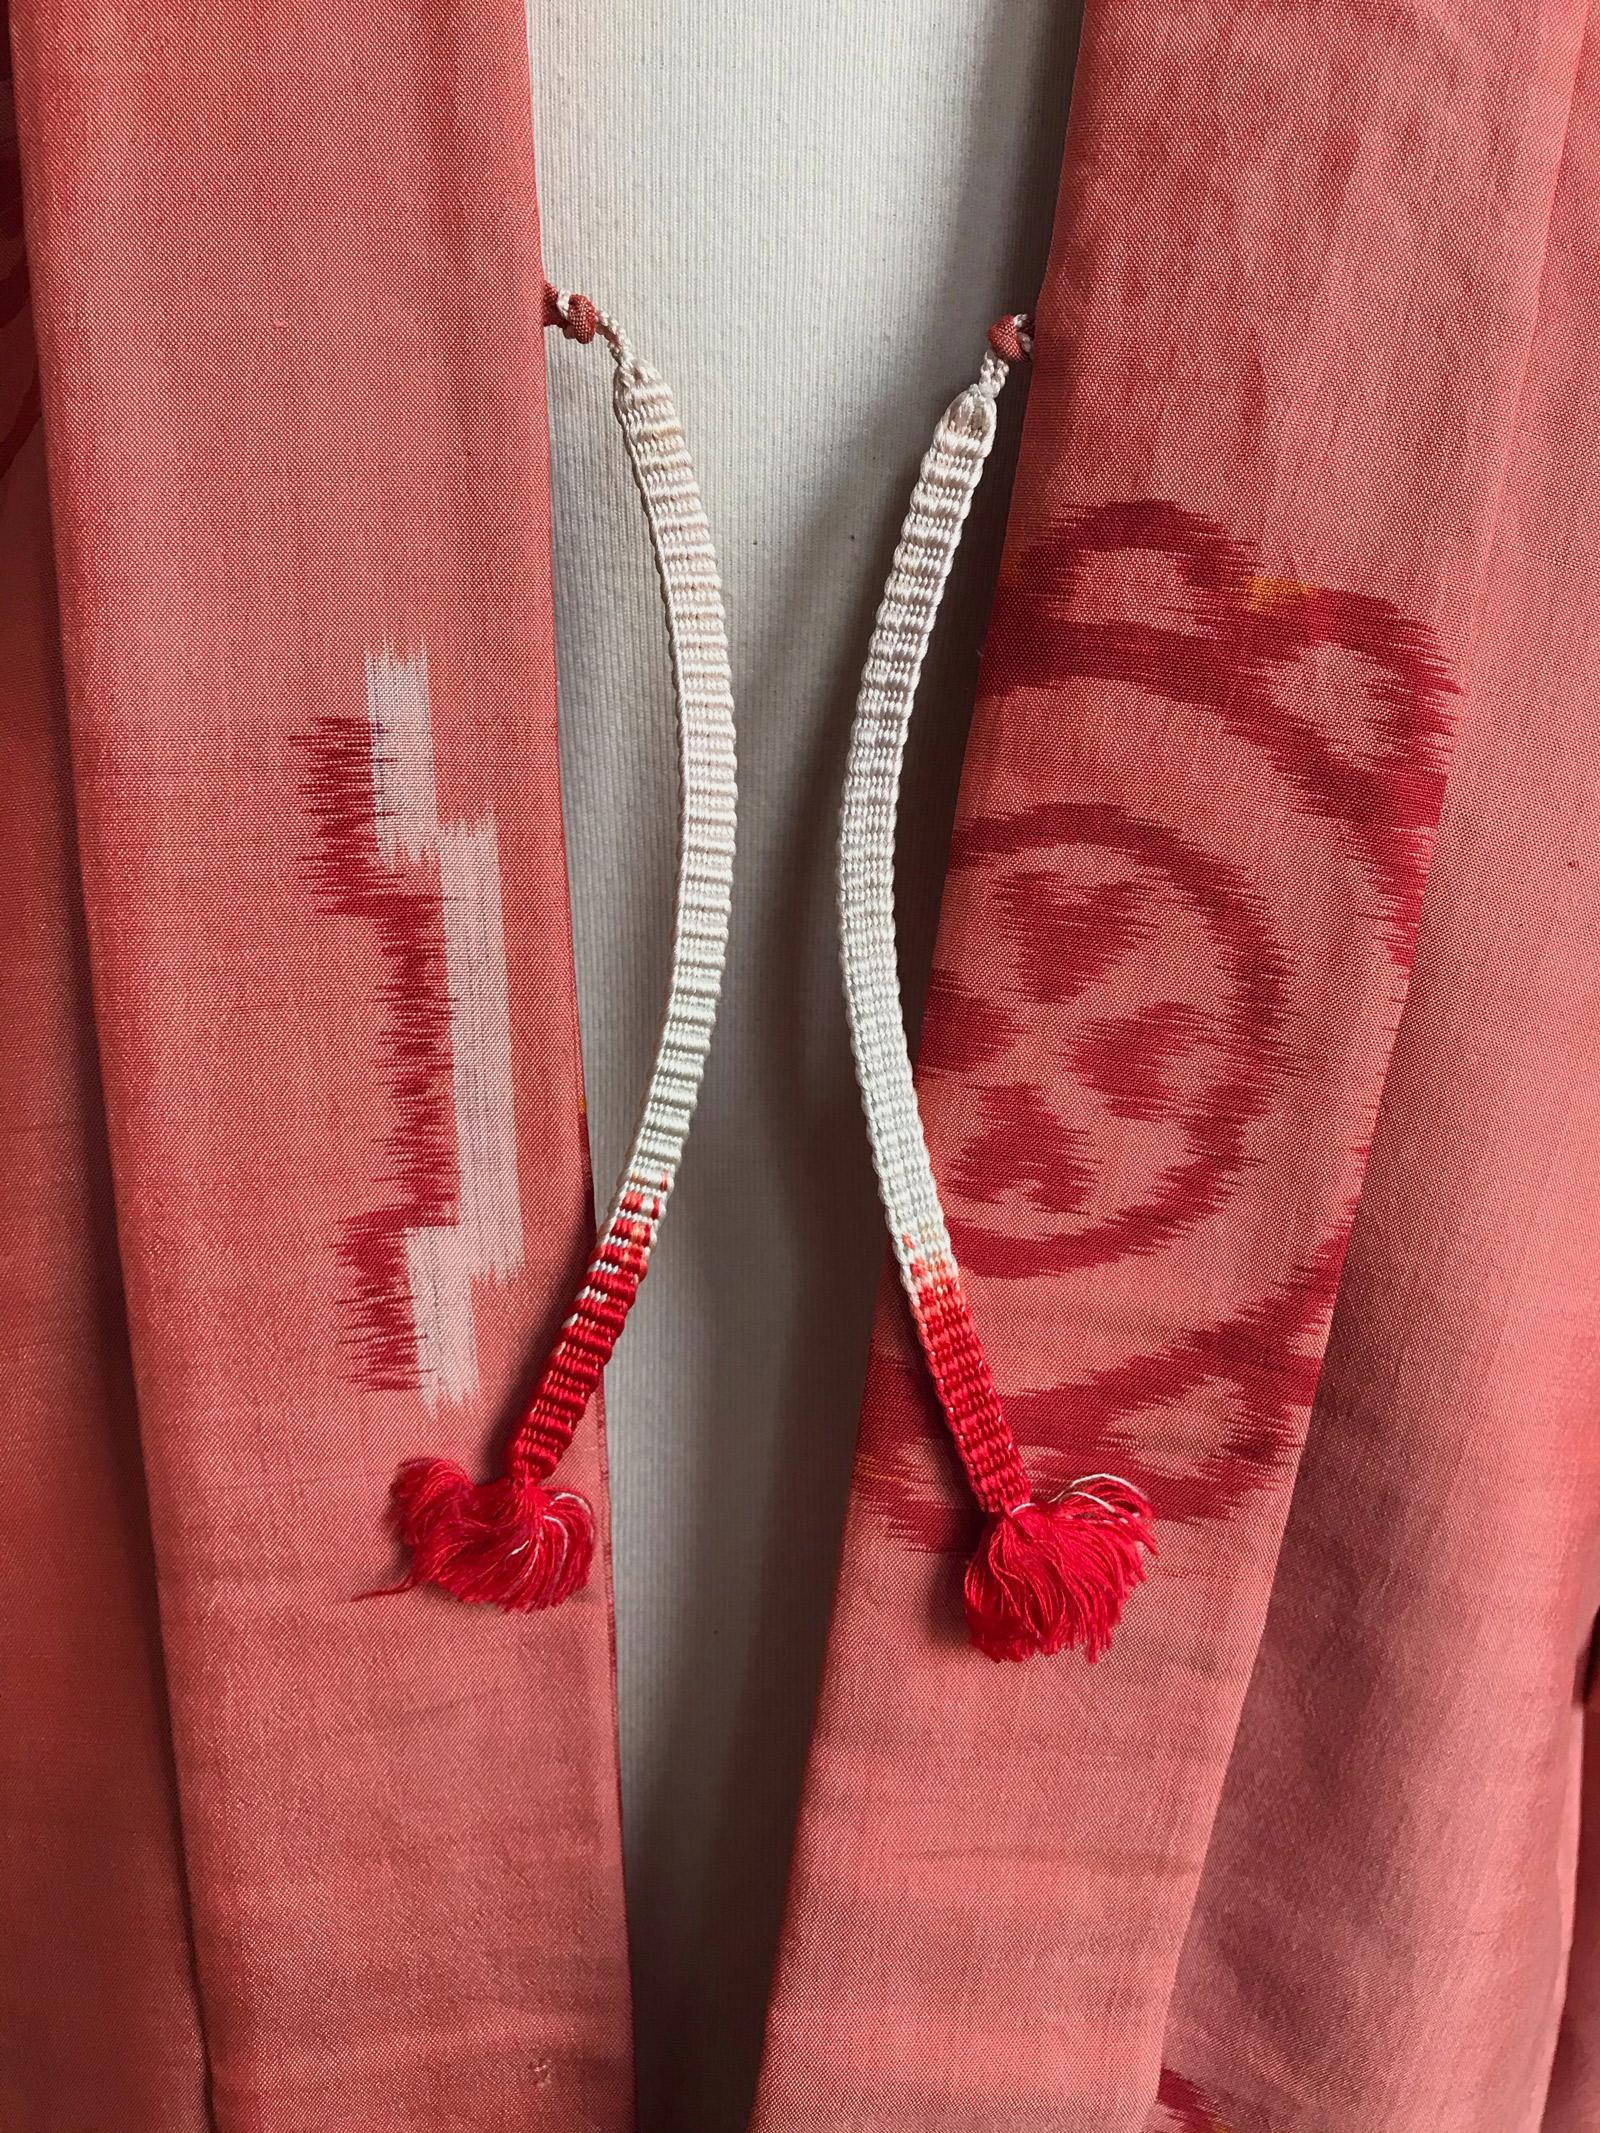 Momo – short Kimono in coral-peach Meisen silk with woven pattern